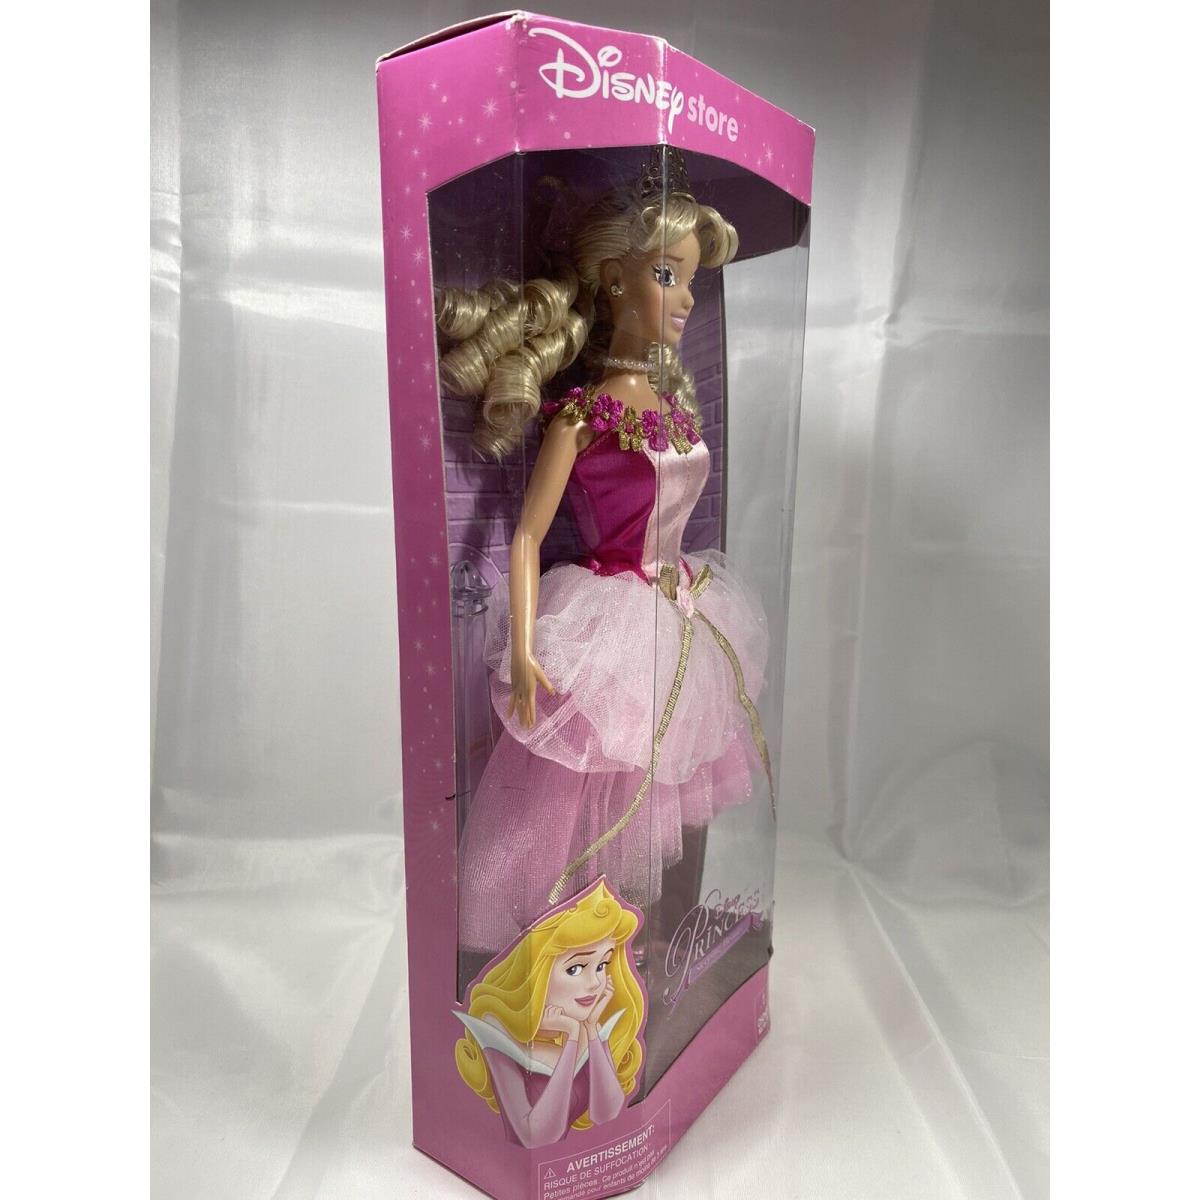 Disney Store Disney Princess Sleeping Beauty Ballerina Doll with Stand